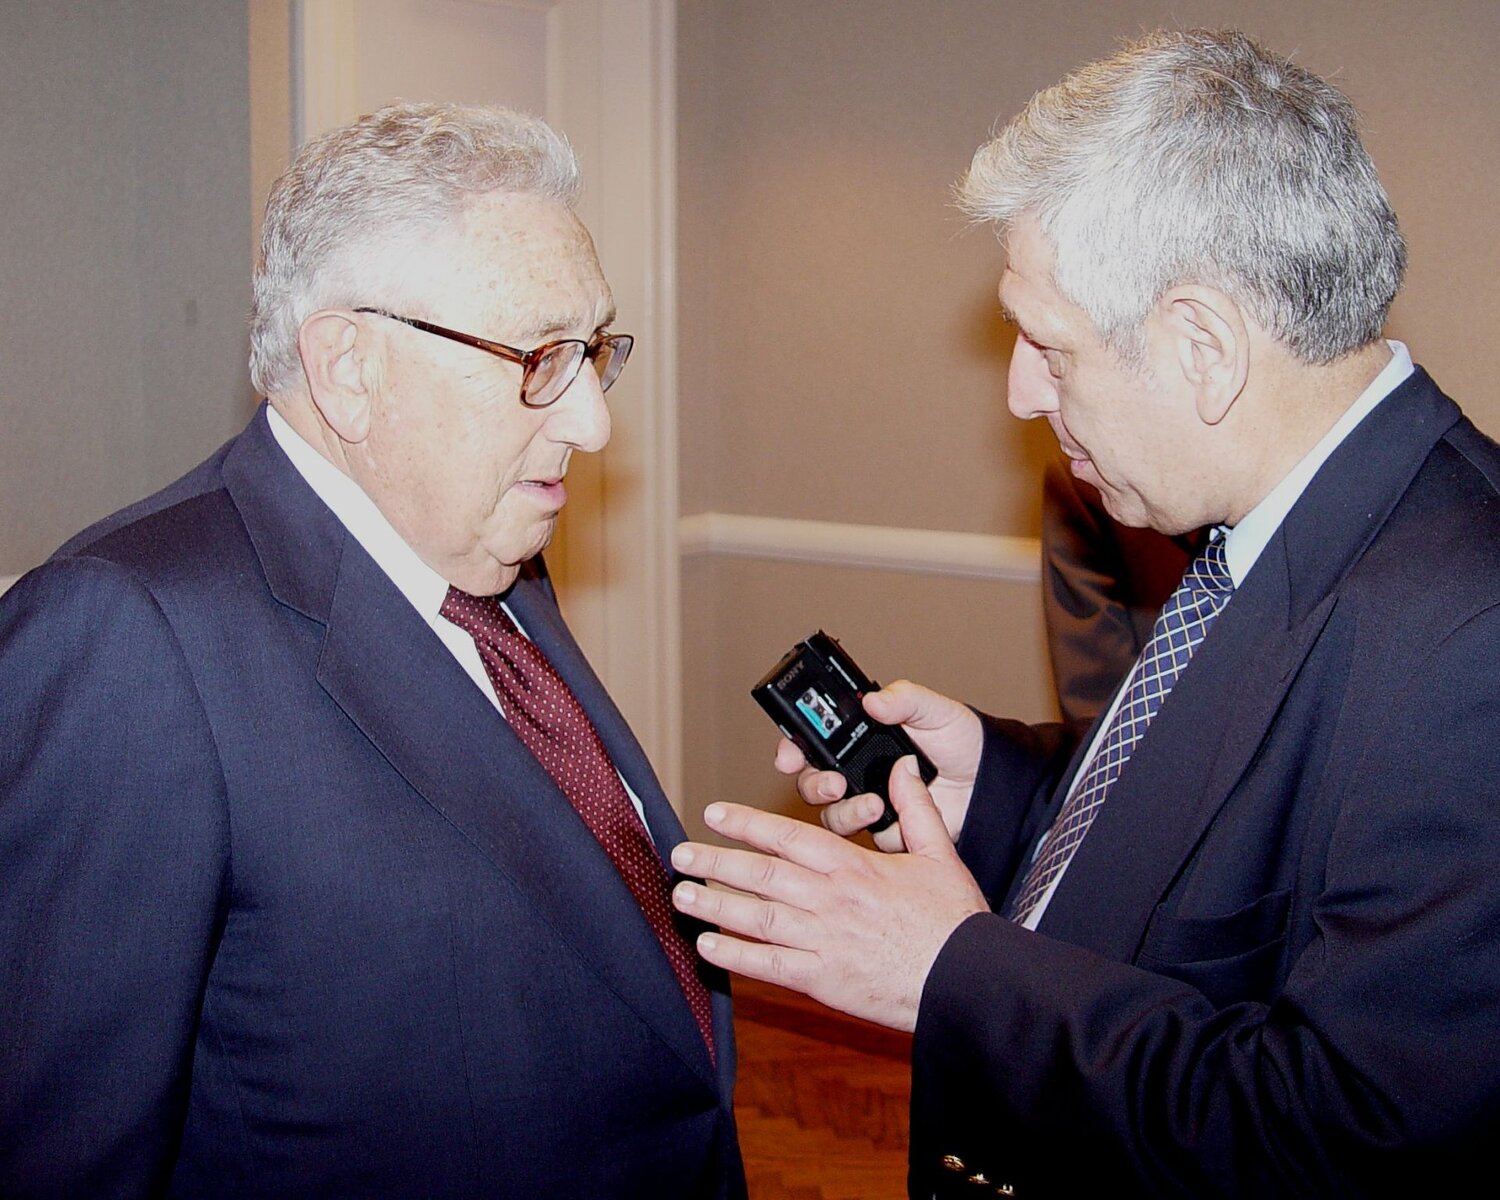 Thomas Barat interviewing Henry Kissinger.